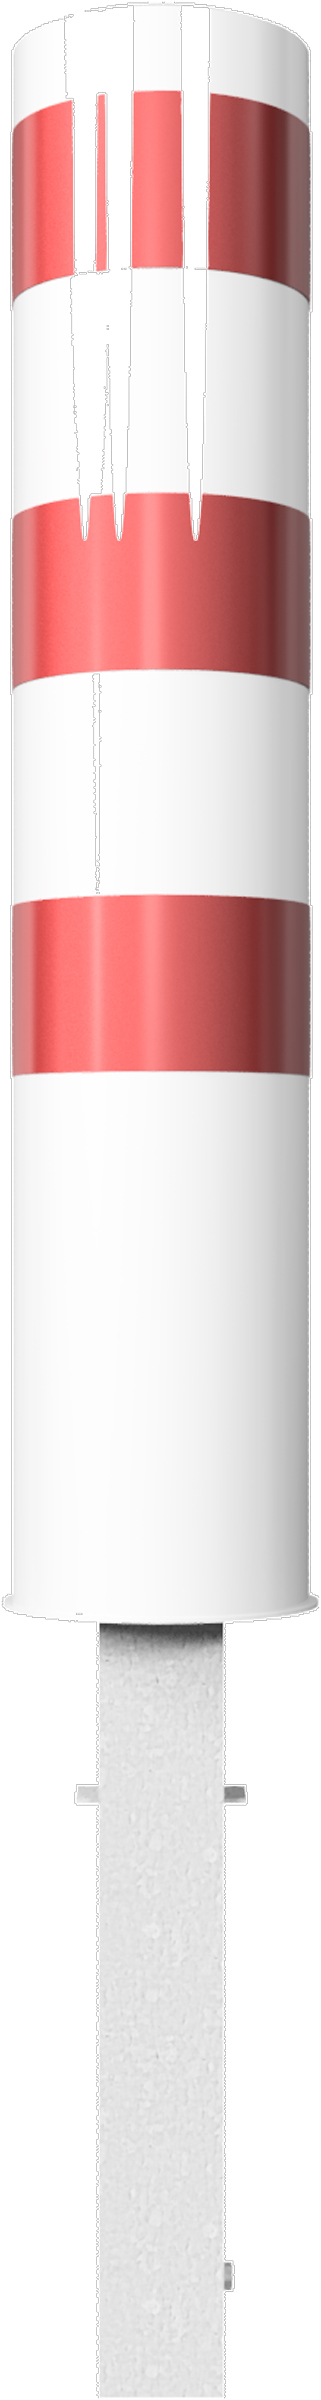 Schake Stahlrohrpoller HD Ø 193 mm weiß | rot - 1,50 m